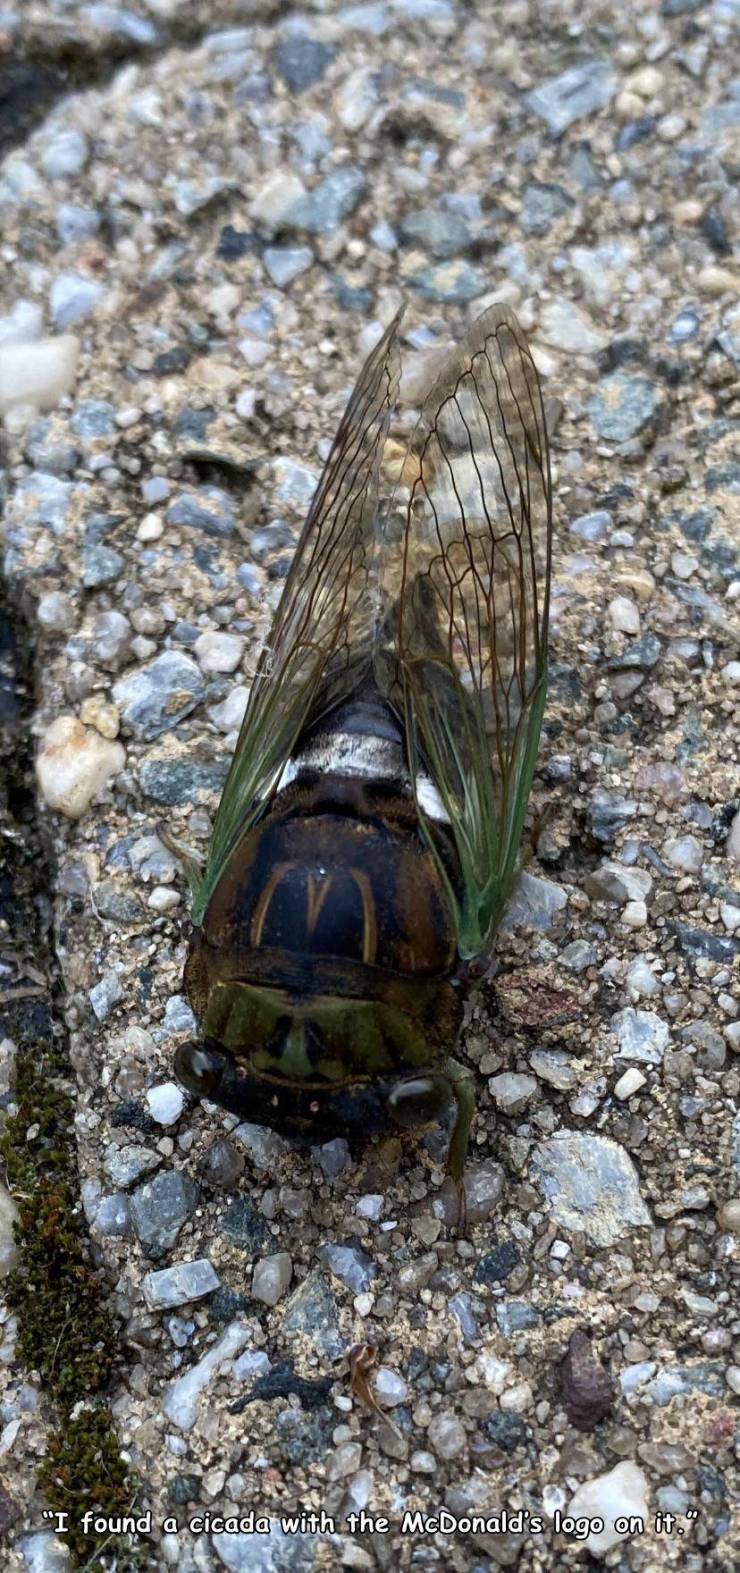 fauna - "I found a cicada with the McDonald's logo on it."